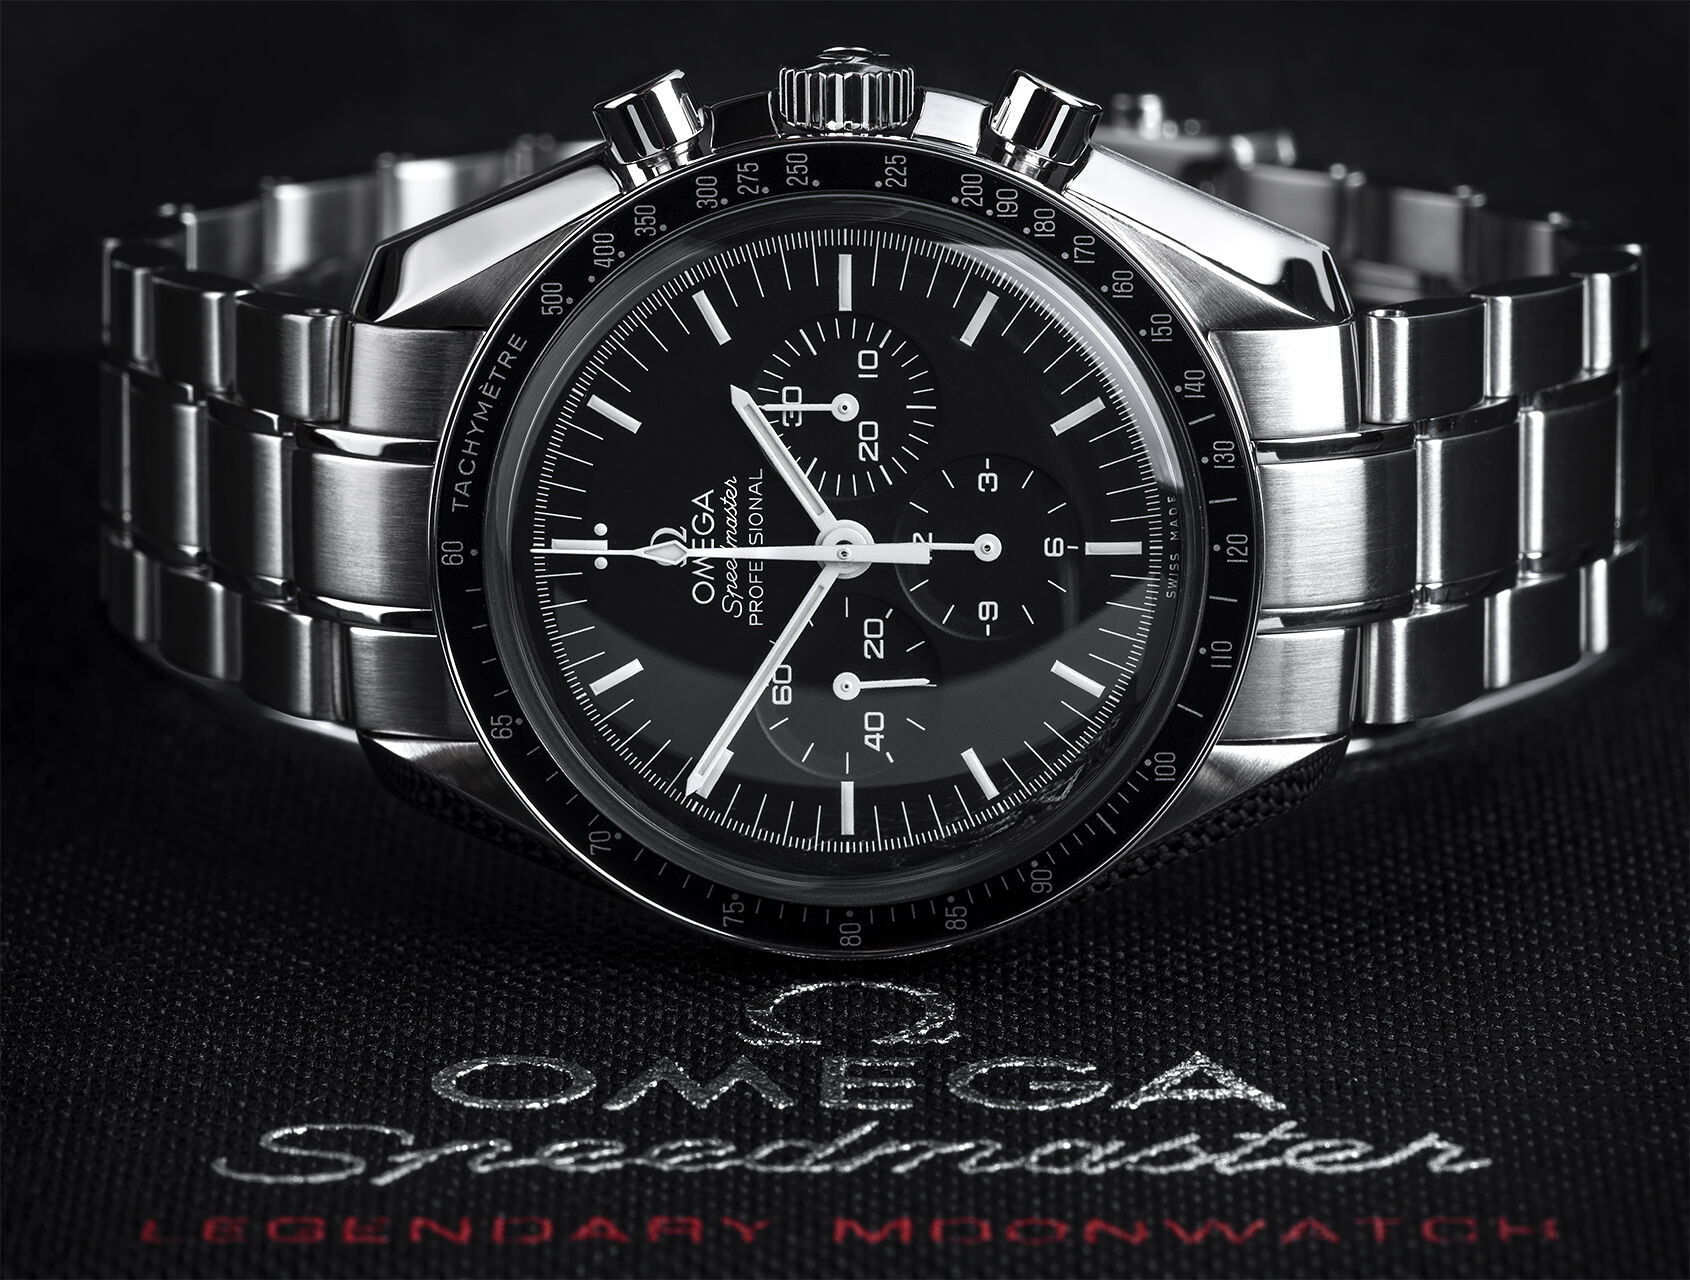 ref 311.30.42.30.01.005 | Moonwatch - 1861 Calibre | Omega Speedmaster Professional